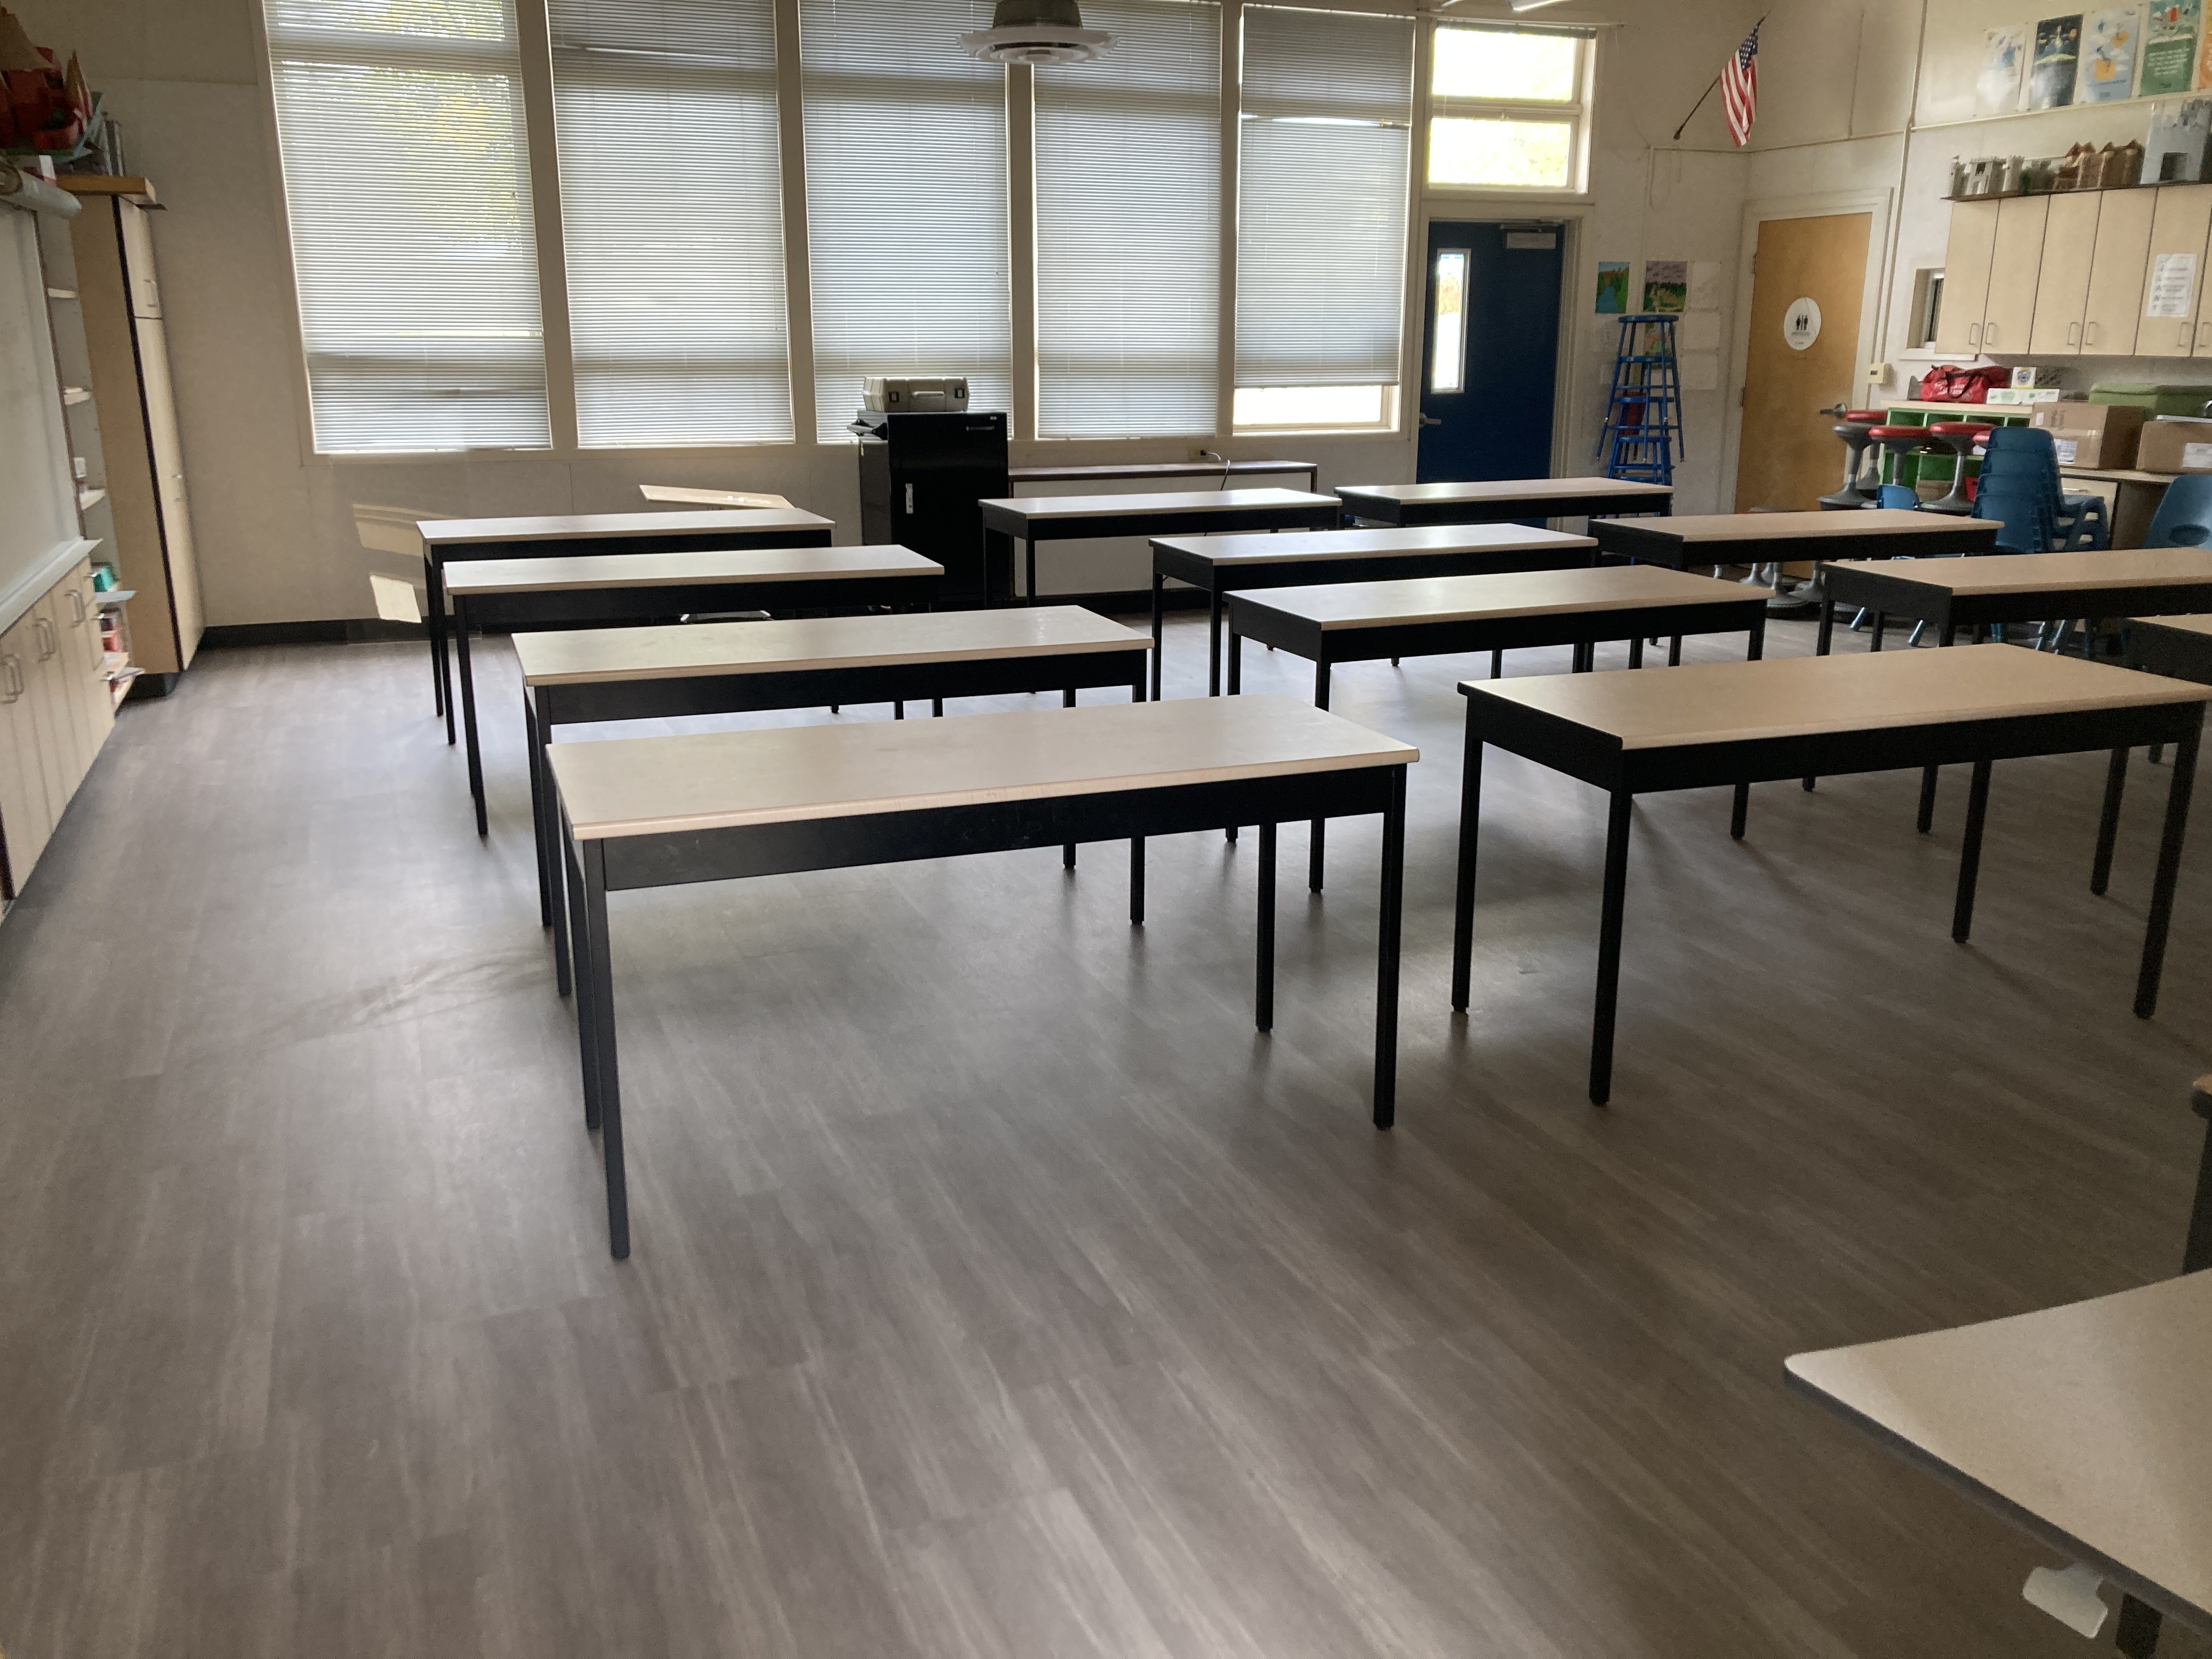 New Middle School Classroom Flooring